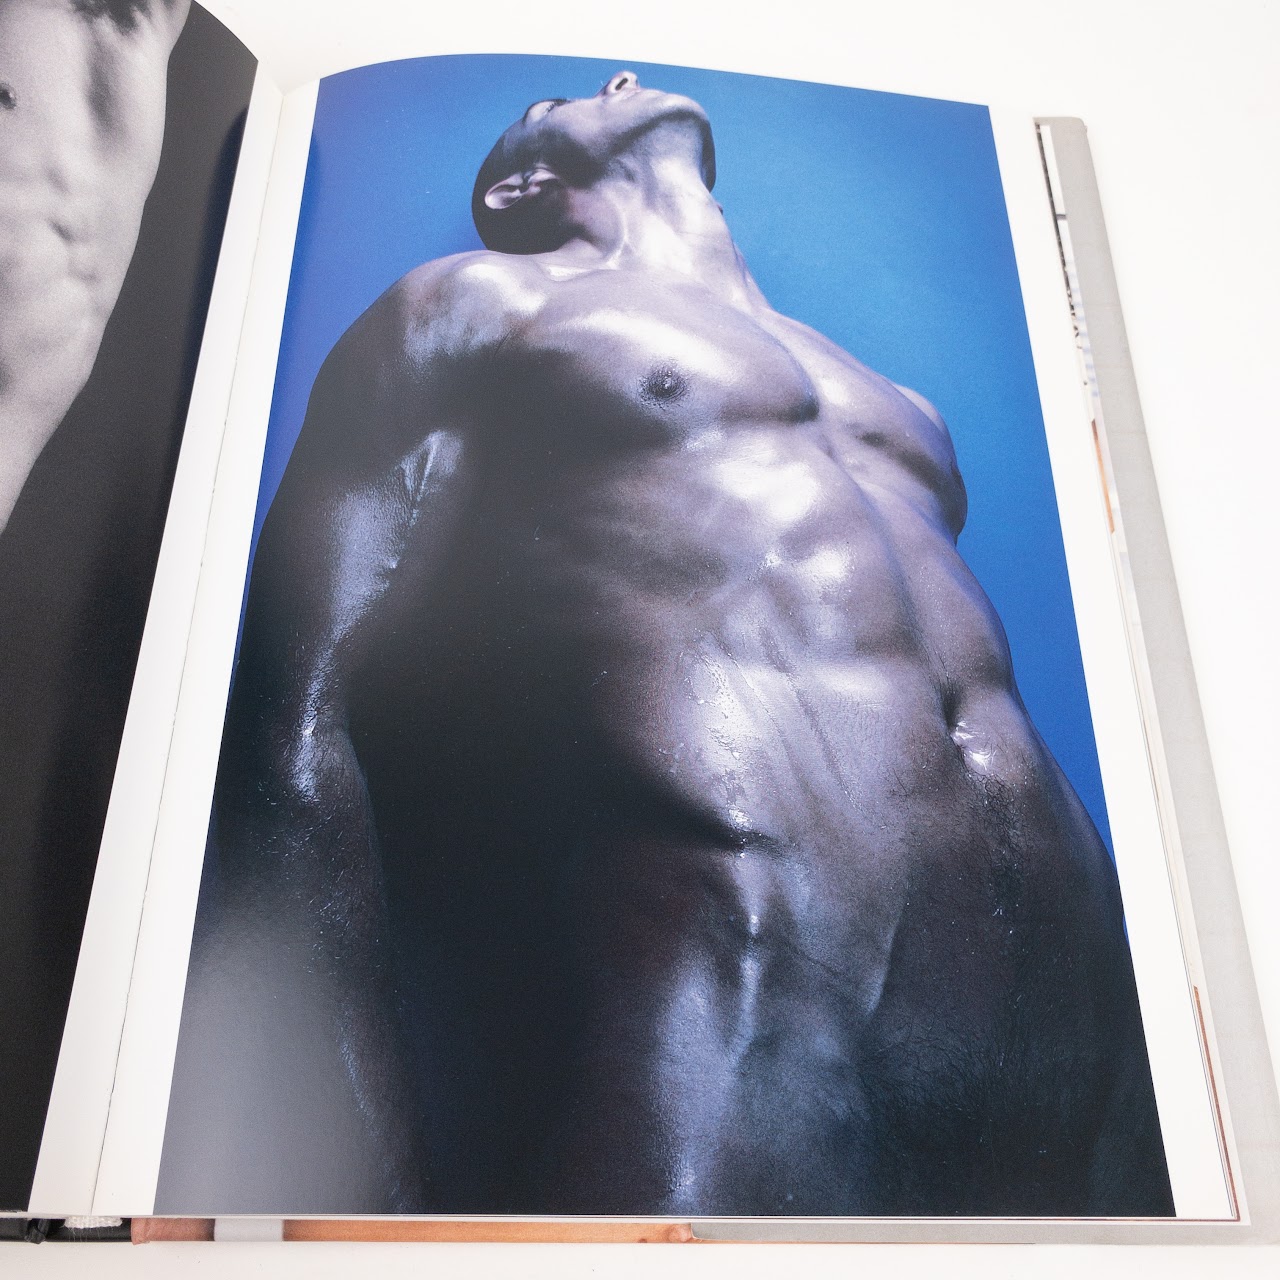 Dylan Rosser 'X-Posed' NSFNW Book